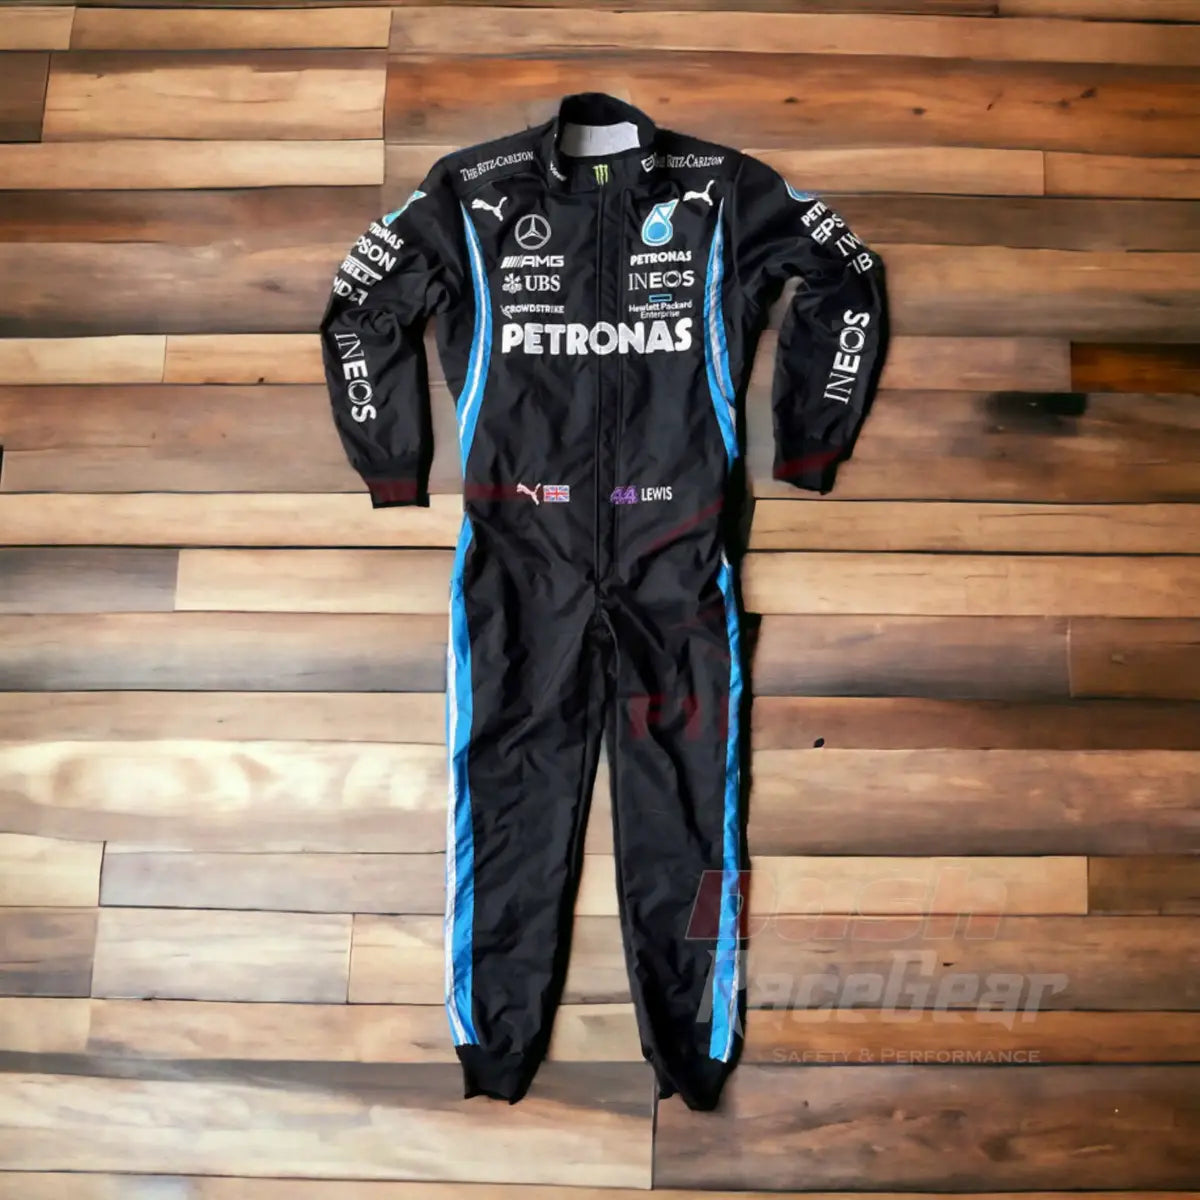 2021 Lewis Hamilton Mercedes Benz F1 Embroidered Race Suit